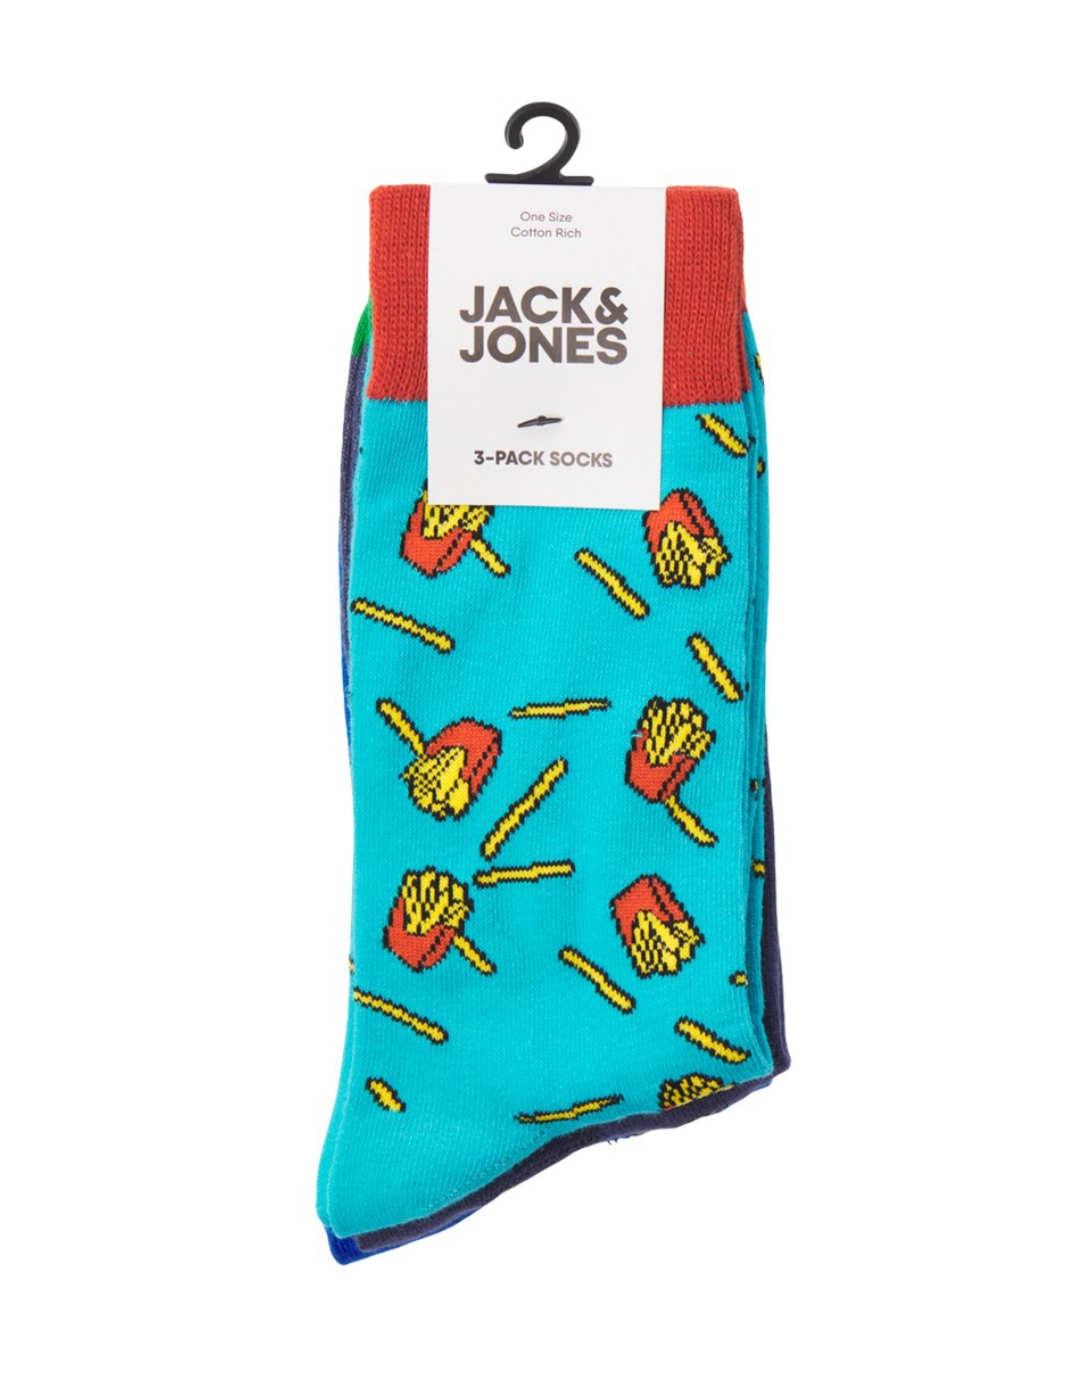 Calcetines Jack&Jones pack3 comida multicolor de hombre